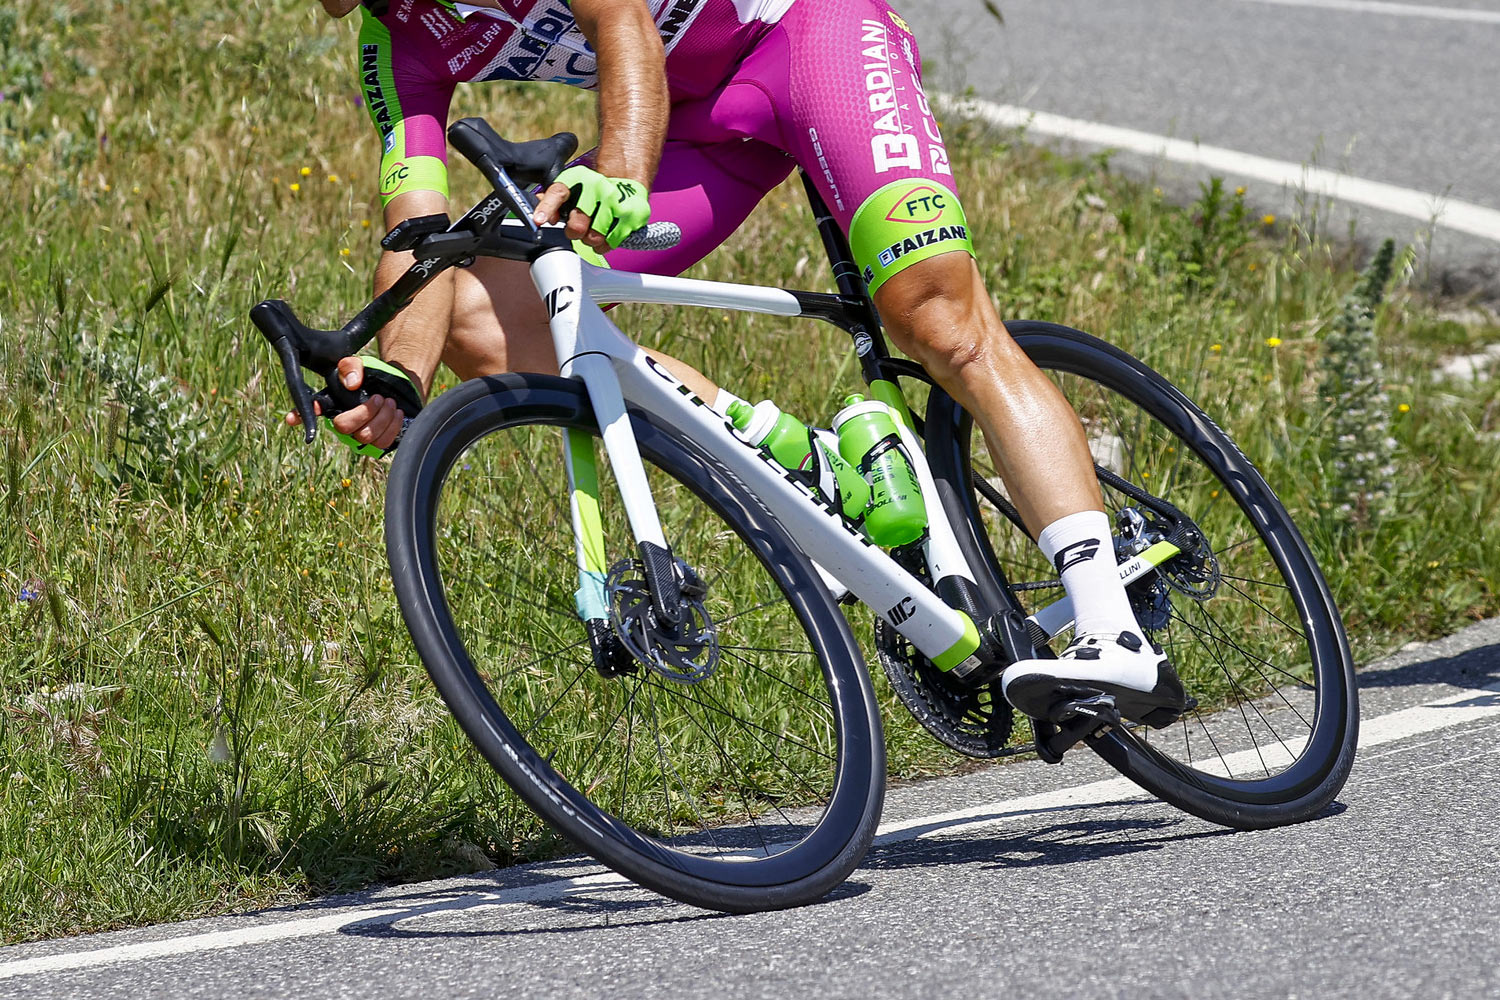 Deda Elementi RS4DB lightweight carbon tubeless disc brake road wheels, Giro photos by Sprint Cycling Agency_ Alessandro Tonelli Team Bardiani-CSF-Faizane, cornering